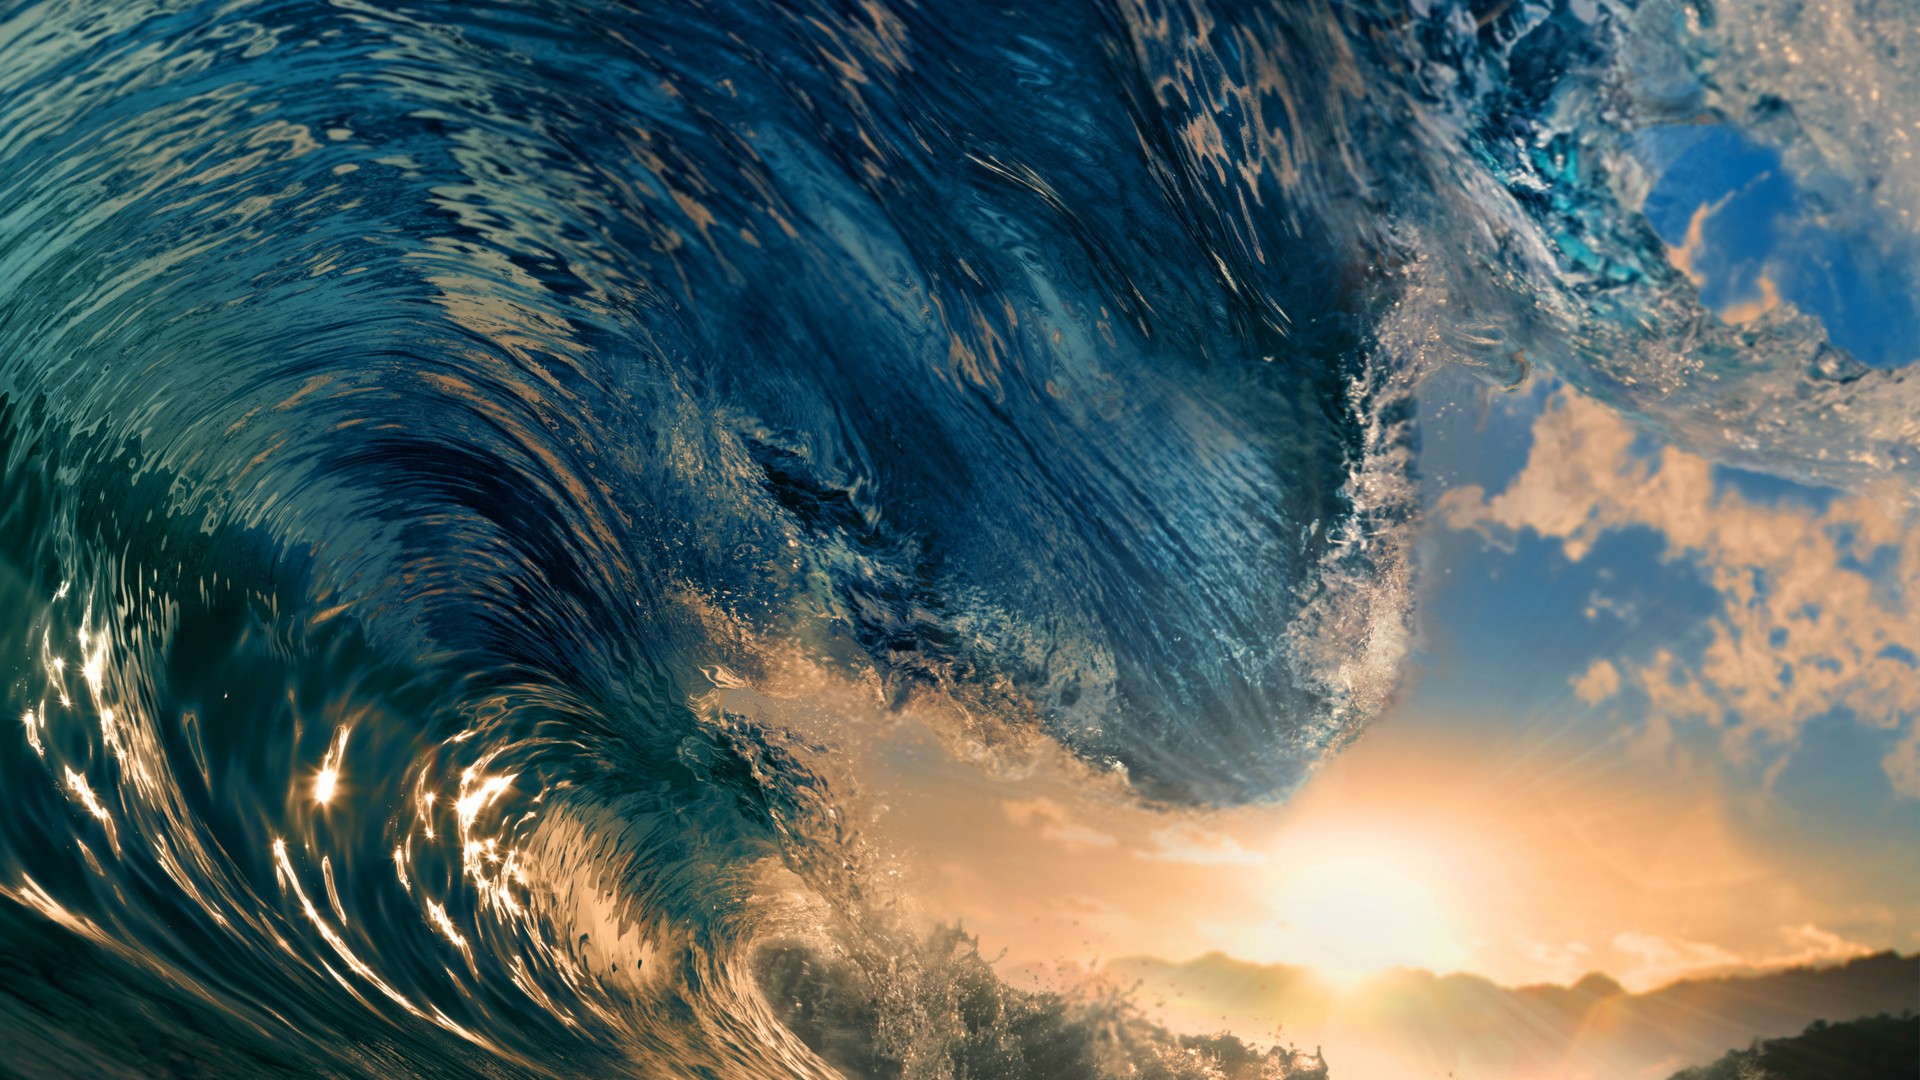 море, 5k, 4k, океан, волна, синий, закат, солнце, лучи, Sea, 5k, 4k wallpaper, ocean, water, wave, sunset, sky, rays, sun, blue (horizontal)